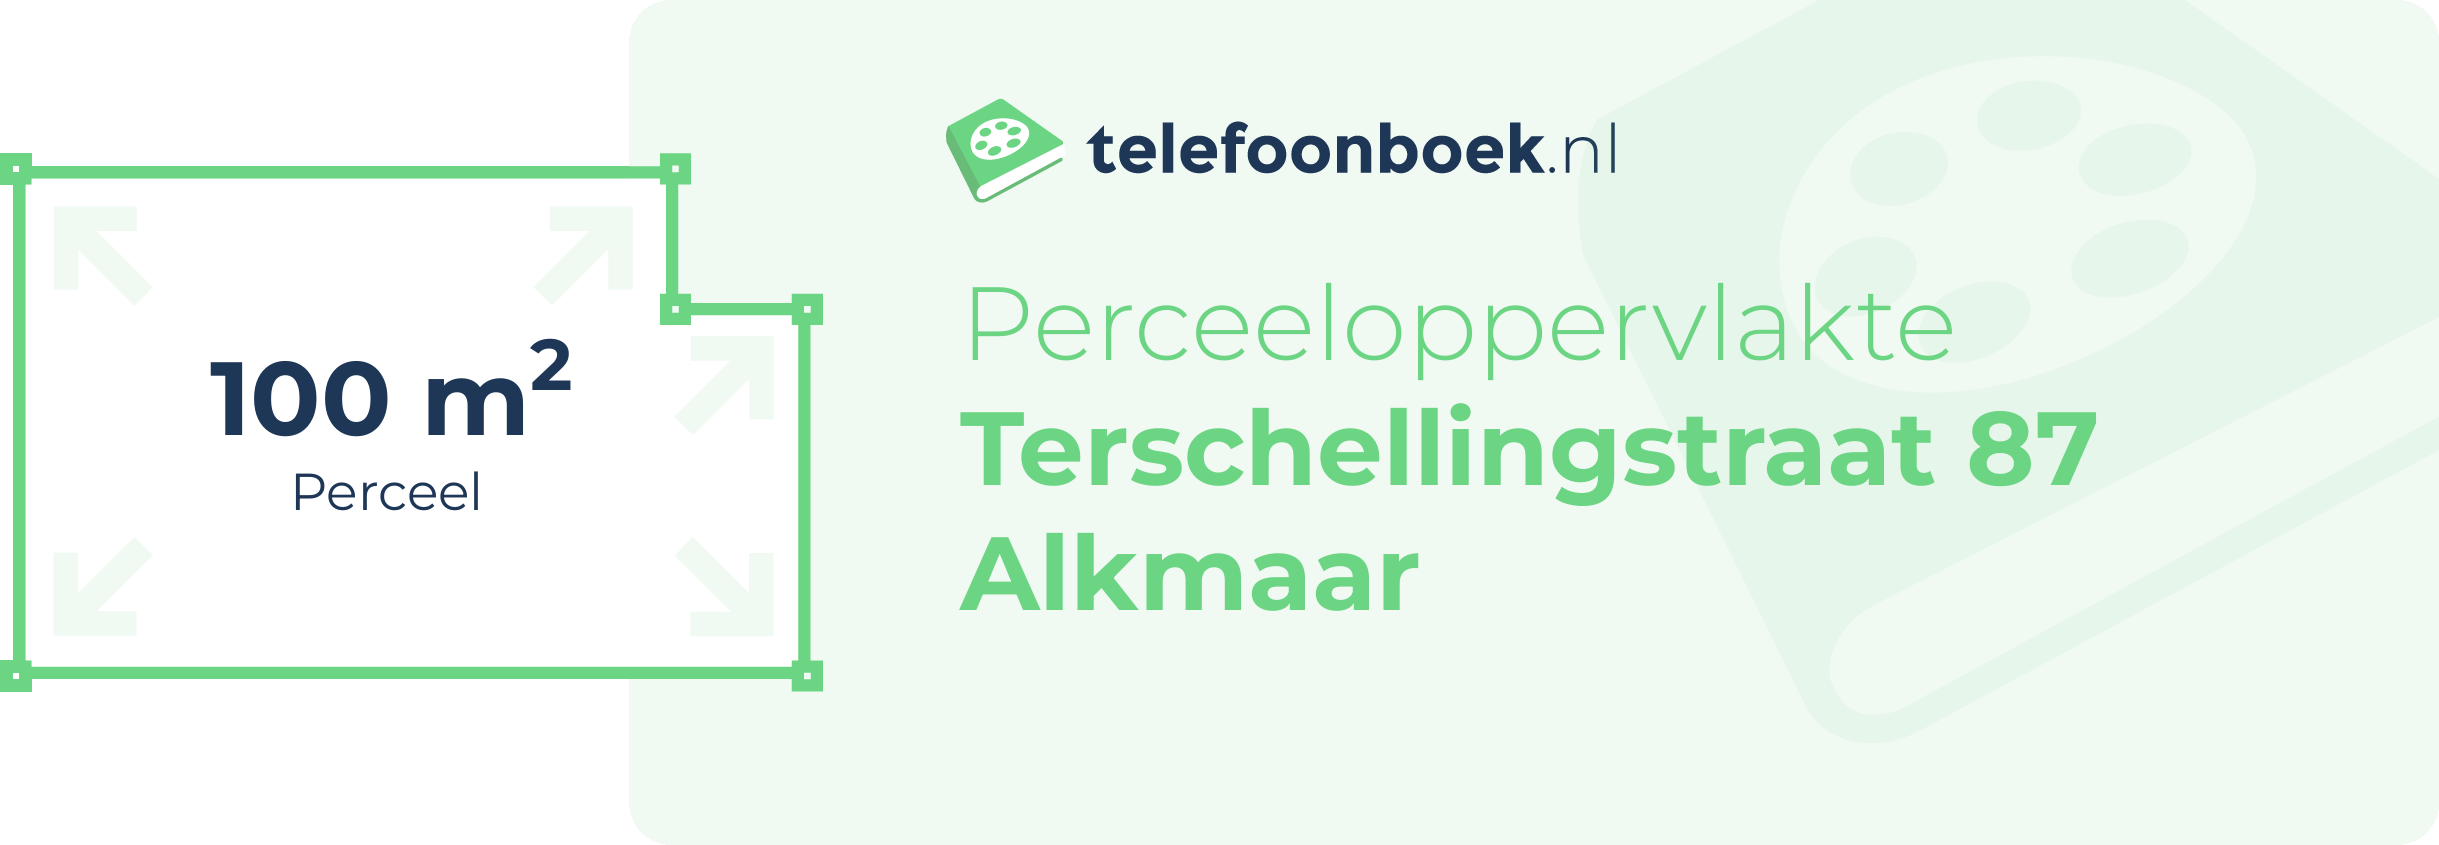 Perceeloppervlakte Terschellingstraat 87 Alkmaar